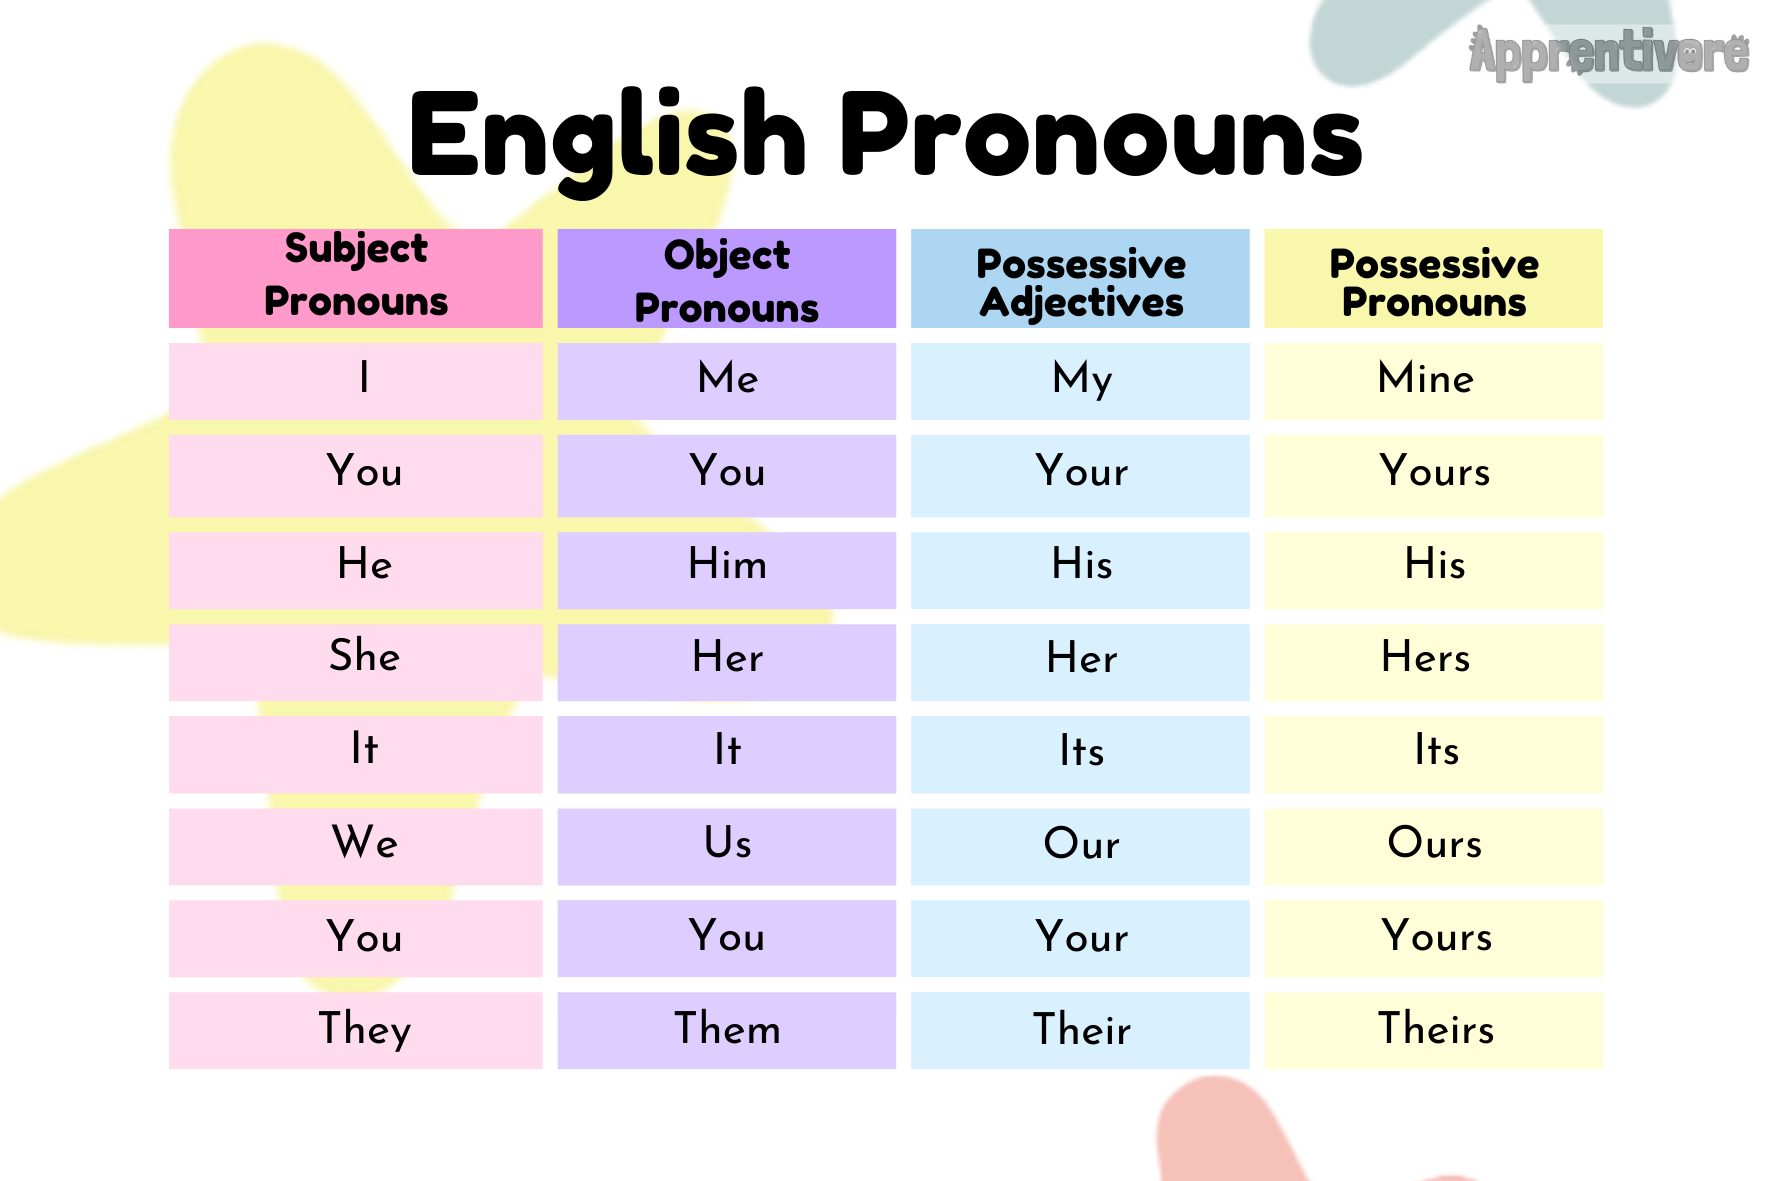 Les pronoms anglais